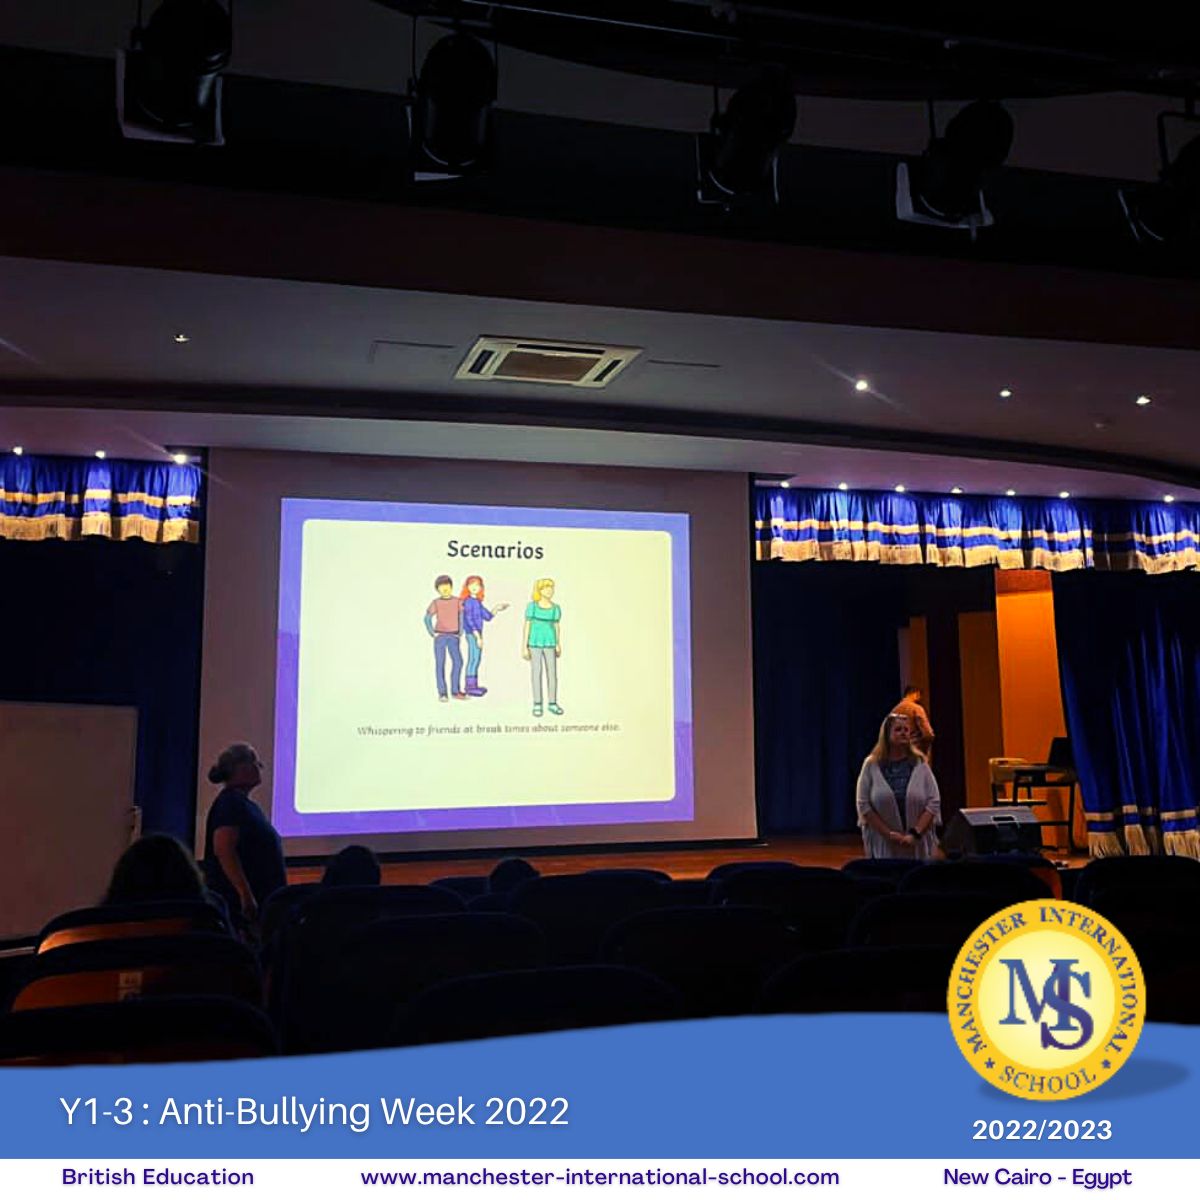 Y1-3 : Anti-Bullying Week